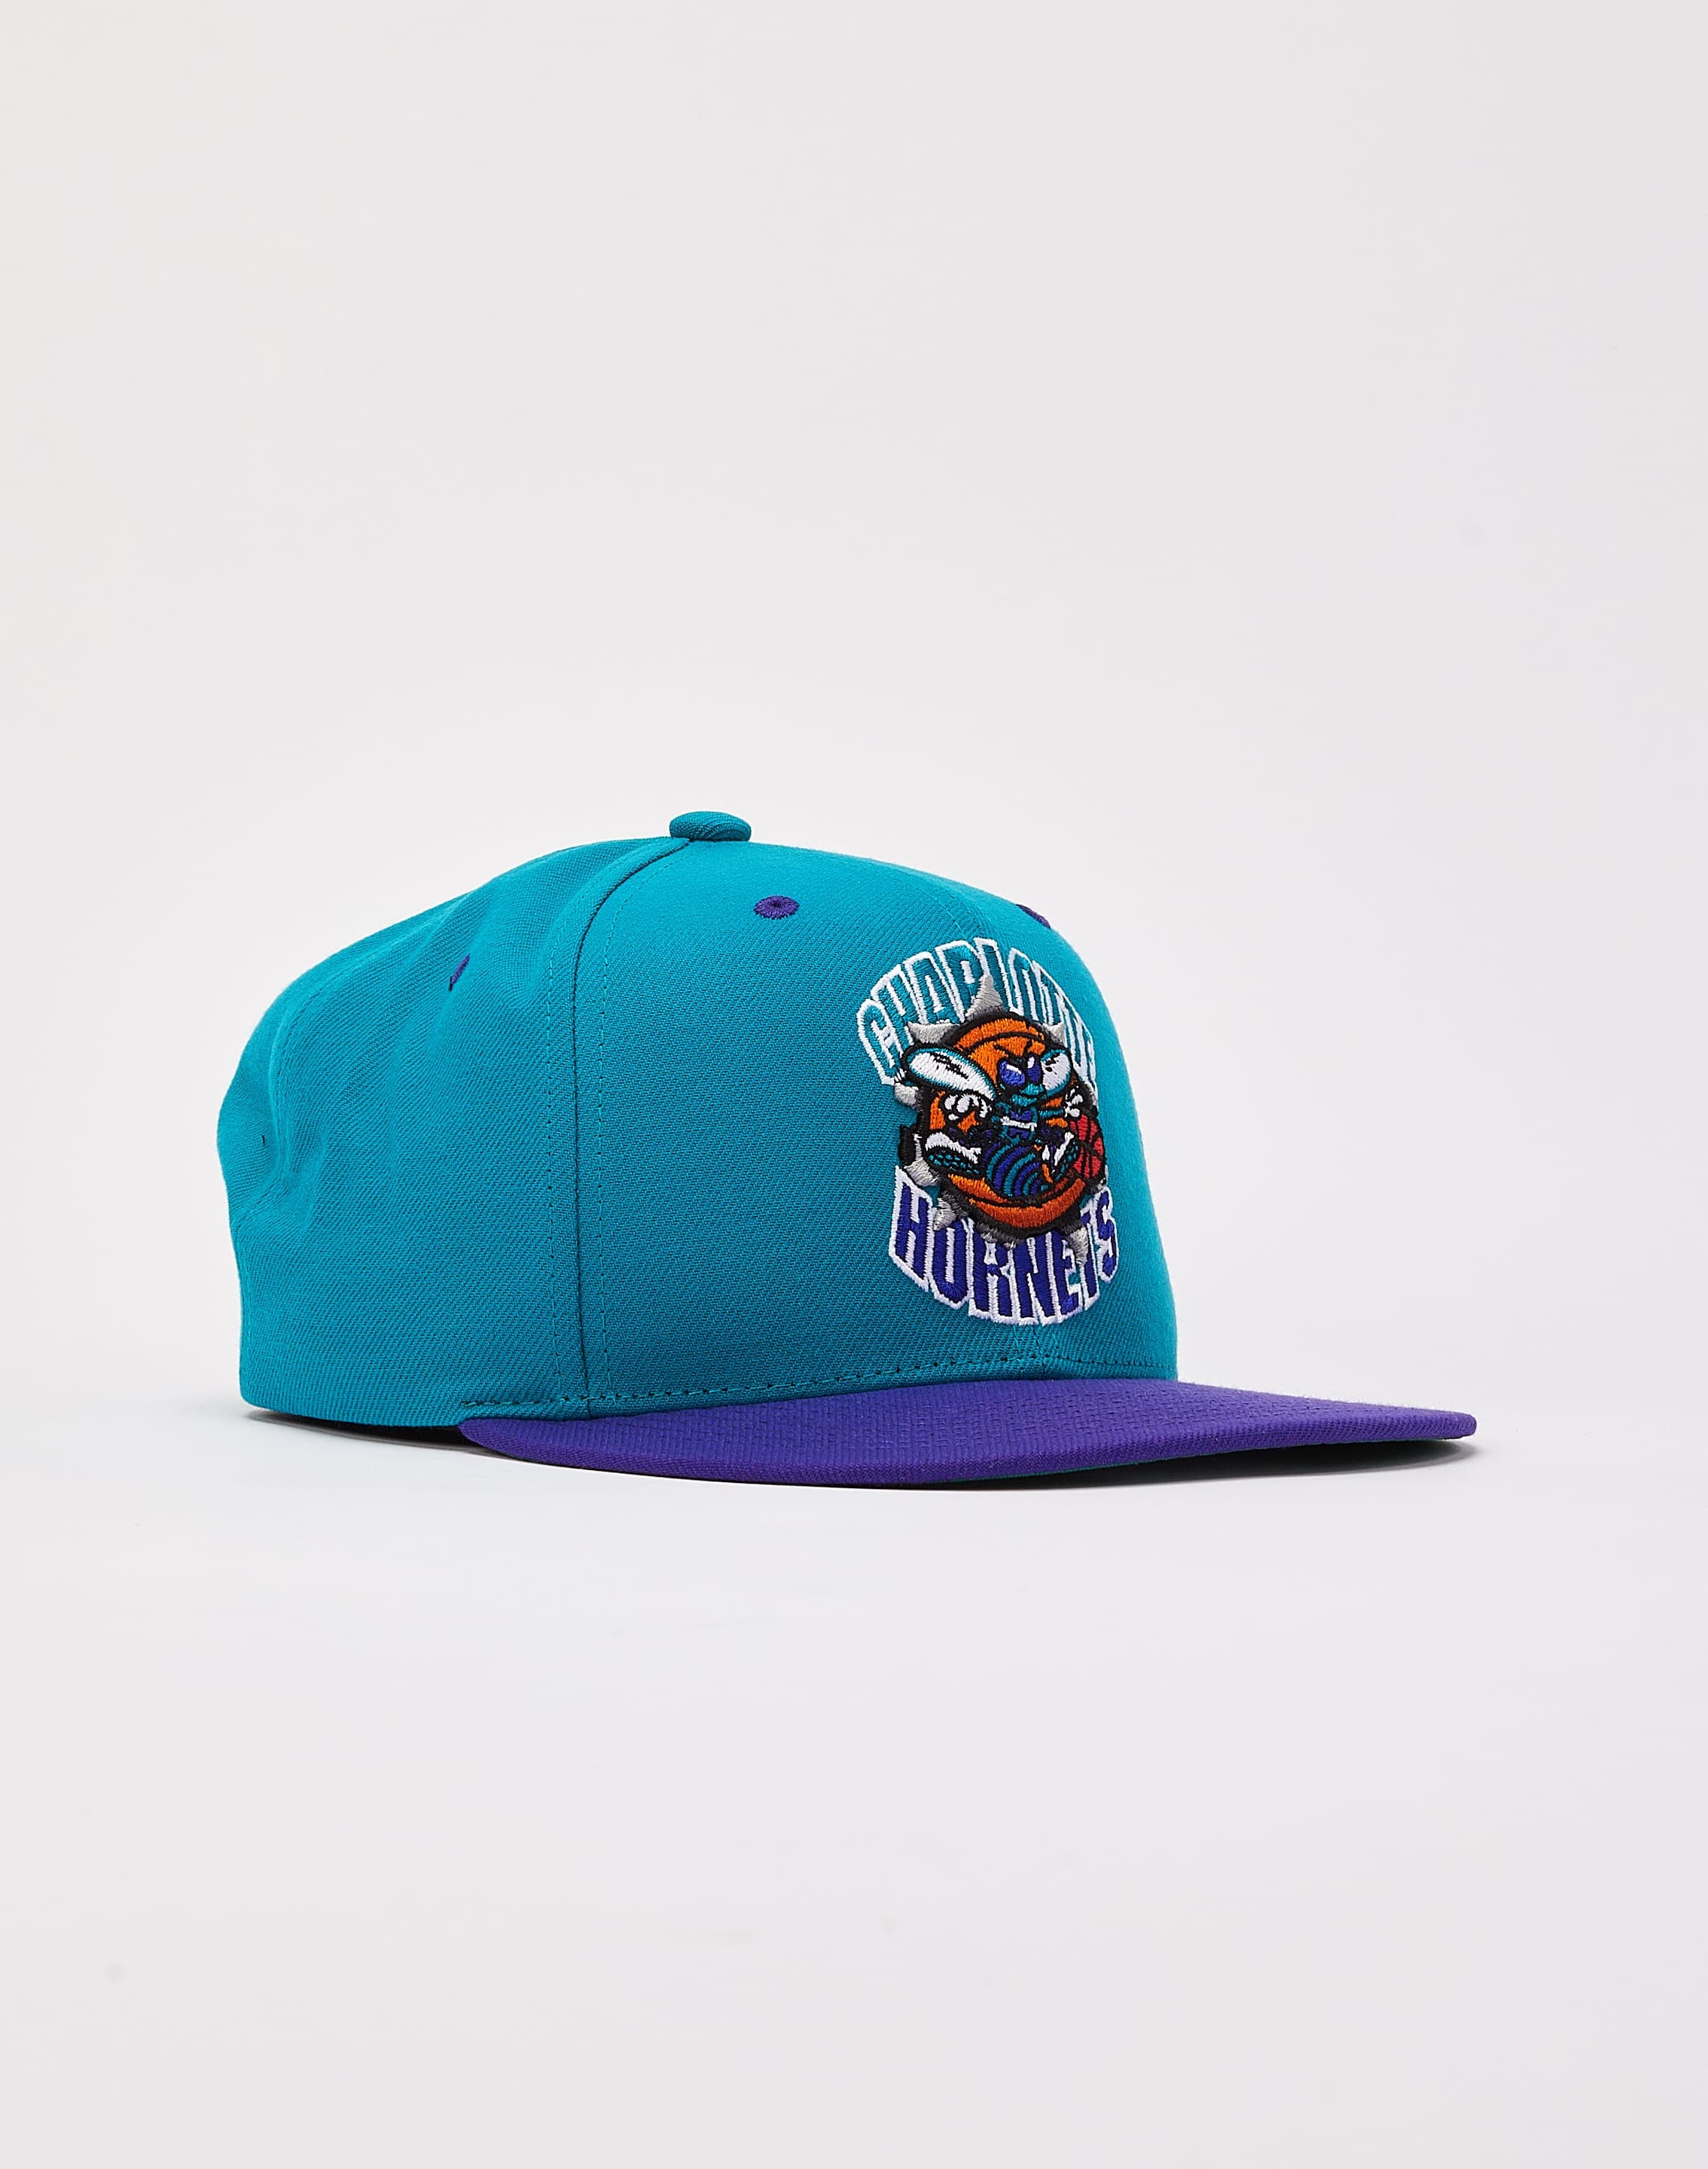 Charlotte Bobcats hard hats